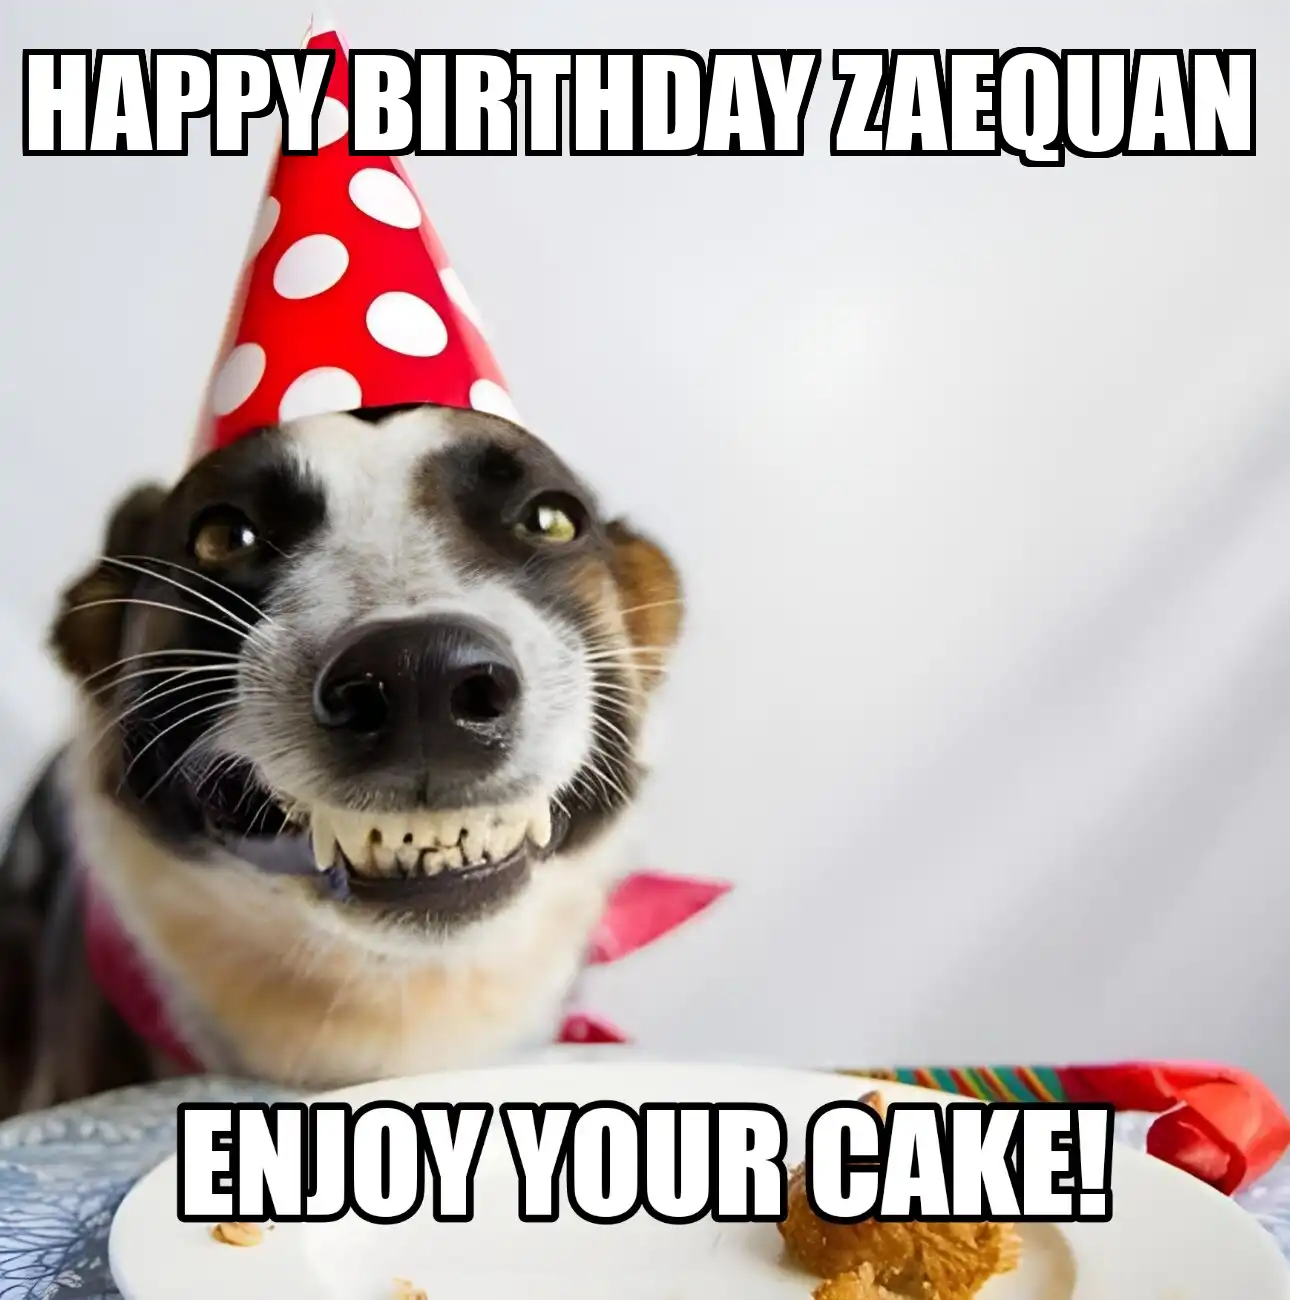 Happy Birthday Zaequan Enjoy Your Cake Dog Meme